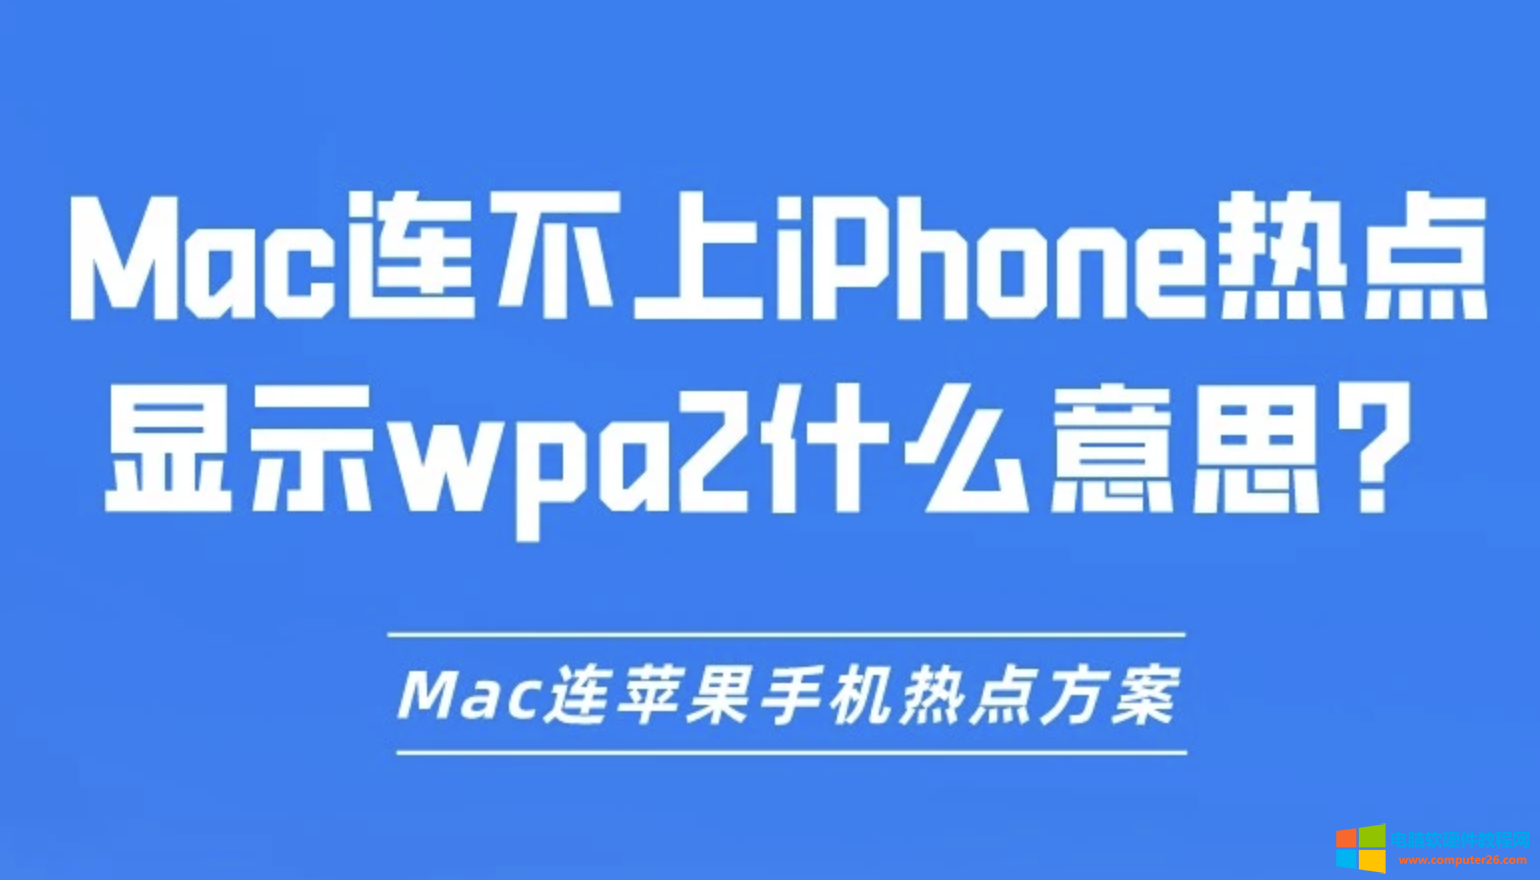 Mac连不上iPhone热点显示wpa2什么意思？Mac连苹果手机热点方案